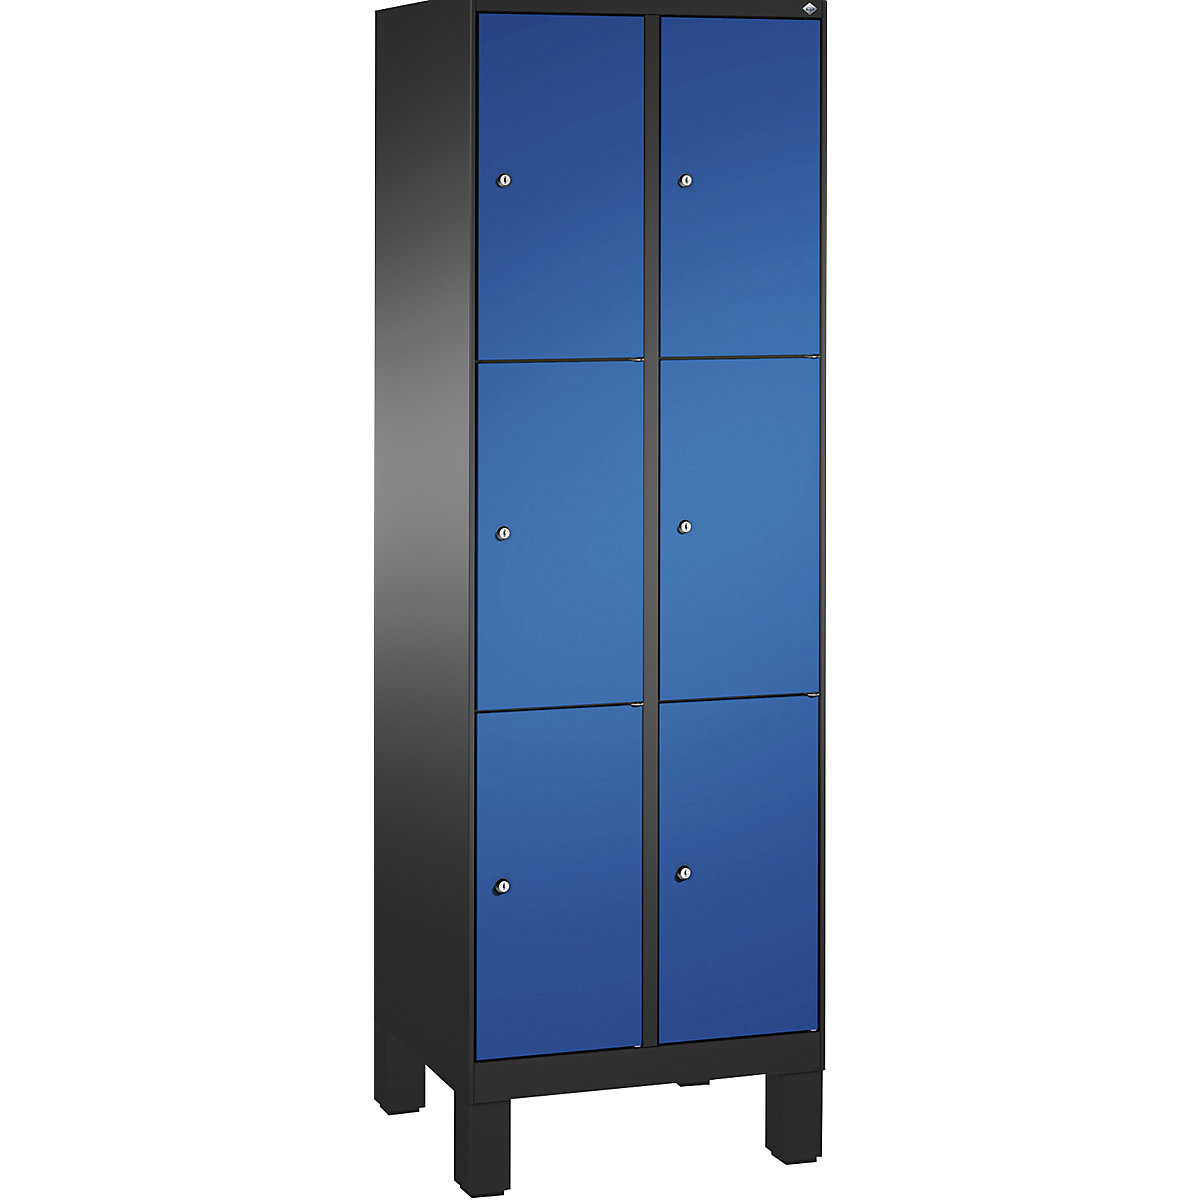 EVOLO locker unit, with feet – C+P, 2 compartments, 3 shelf compartments each, compartment width 300 mm, black grey / gentian blue-2